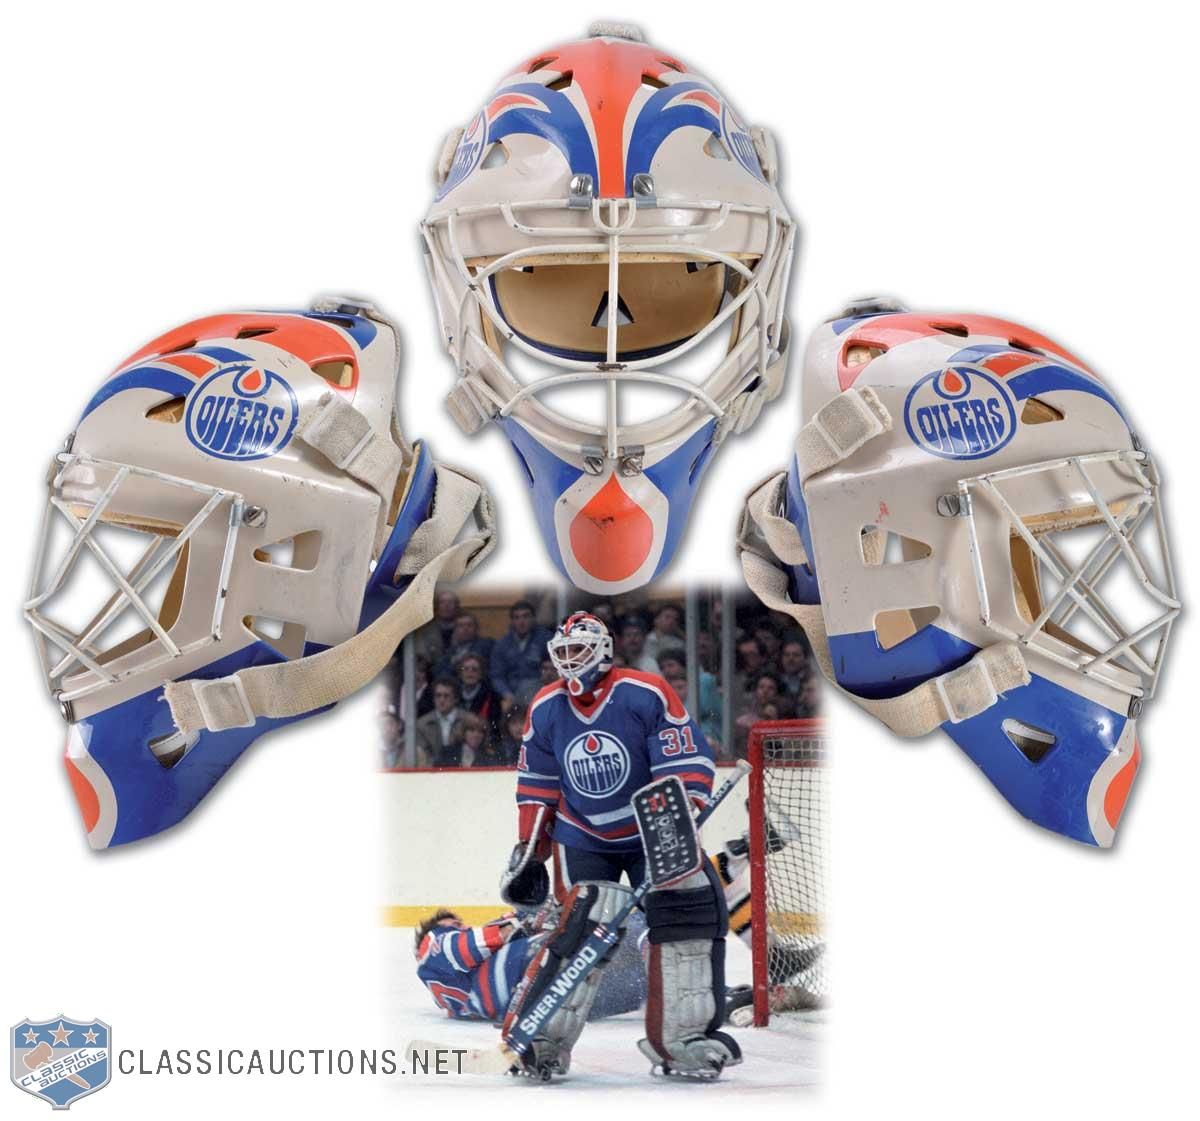 Jersey, mask of former Edmonton Oilers goalie Grant Fuhr stolen from arena, National Sports